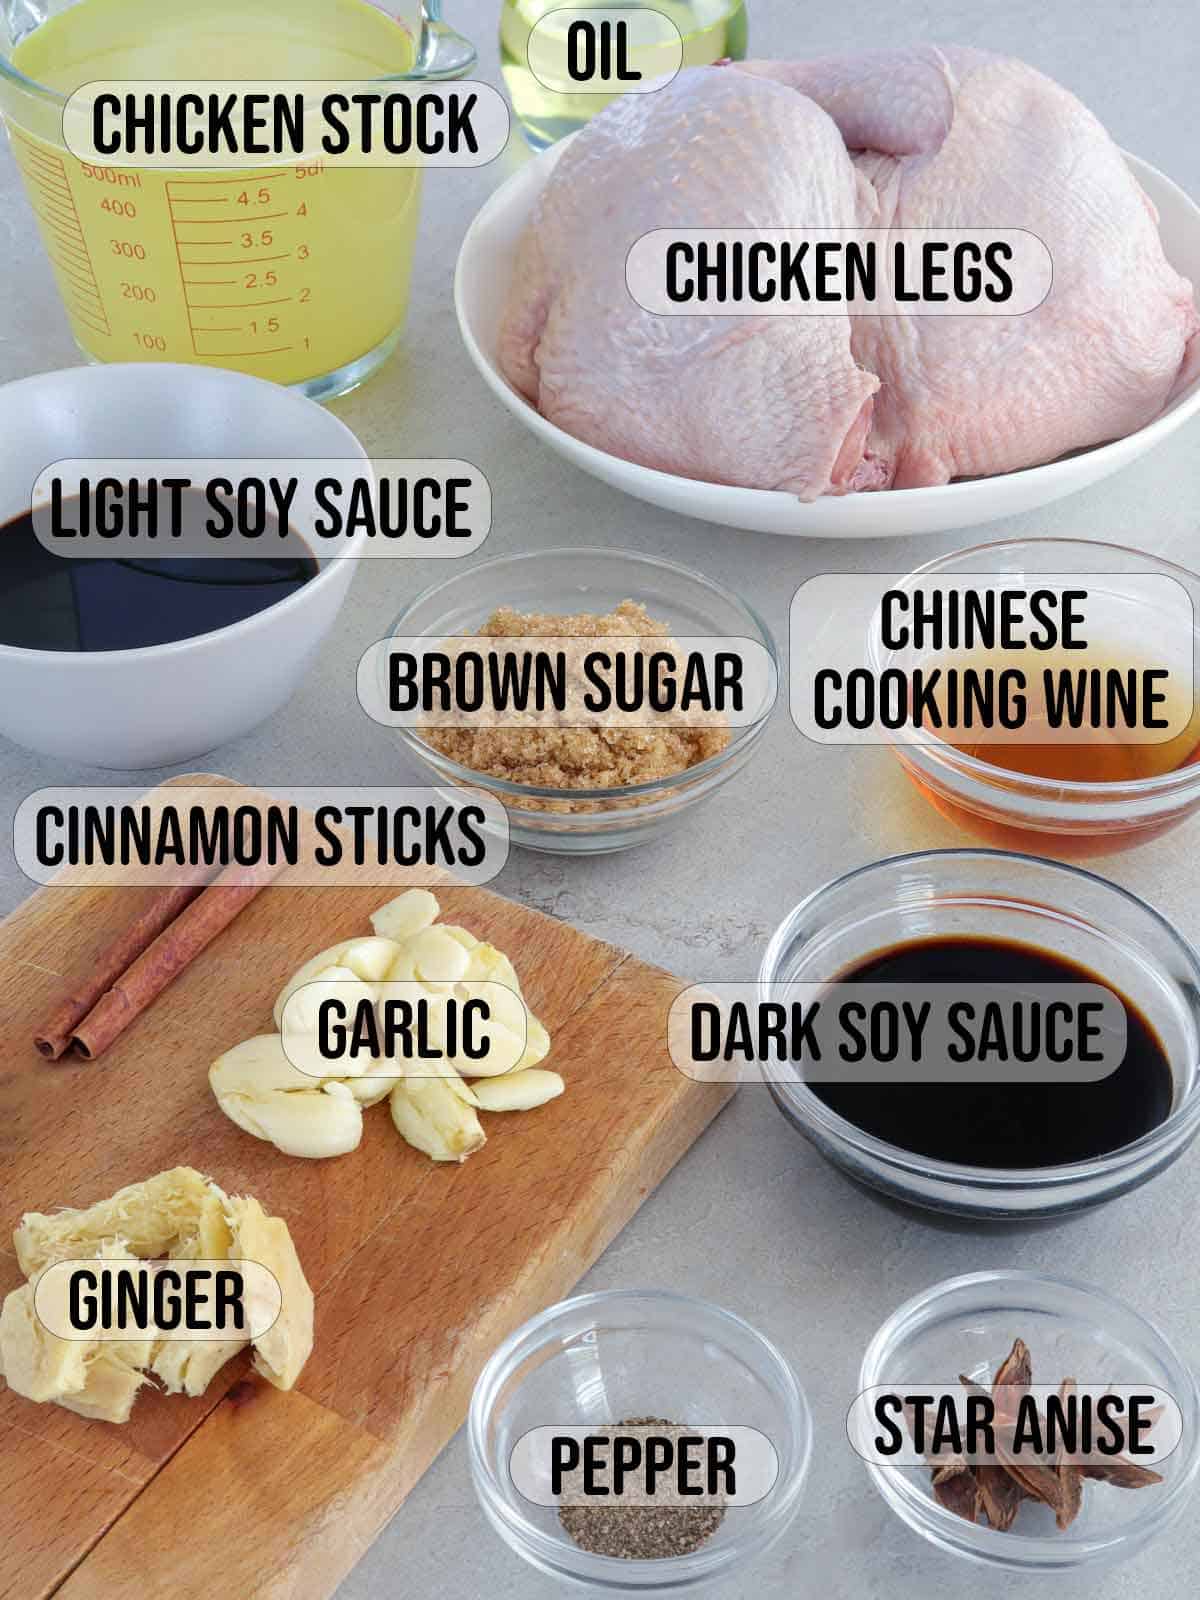 chicken, garlic, onion, brown sugar, dark soy sauce, light soy sauce, Chinese cooking wine, chicken stock, star anise, cinnamon sticks in bowls.